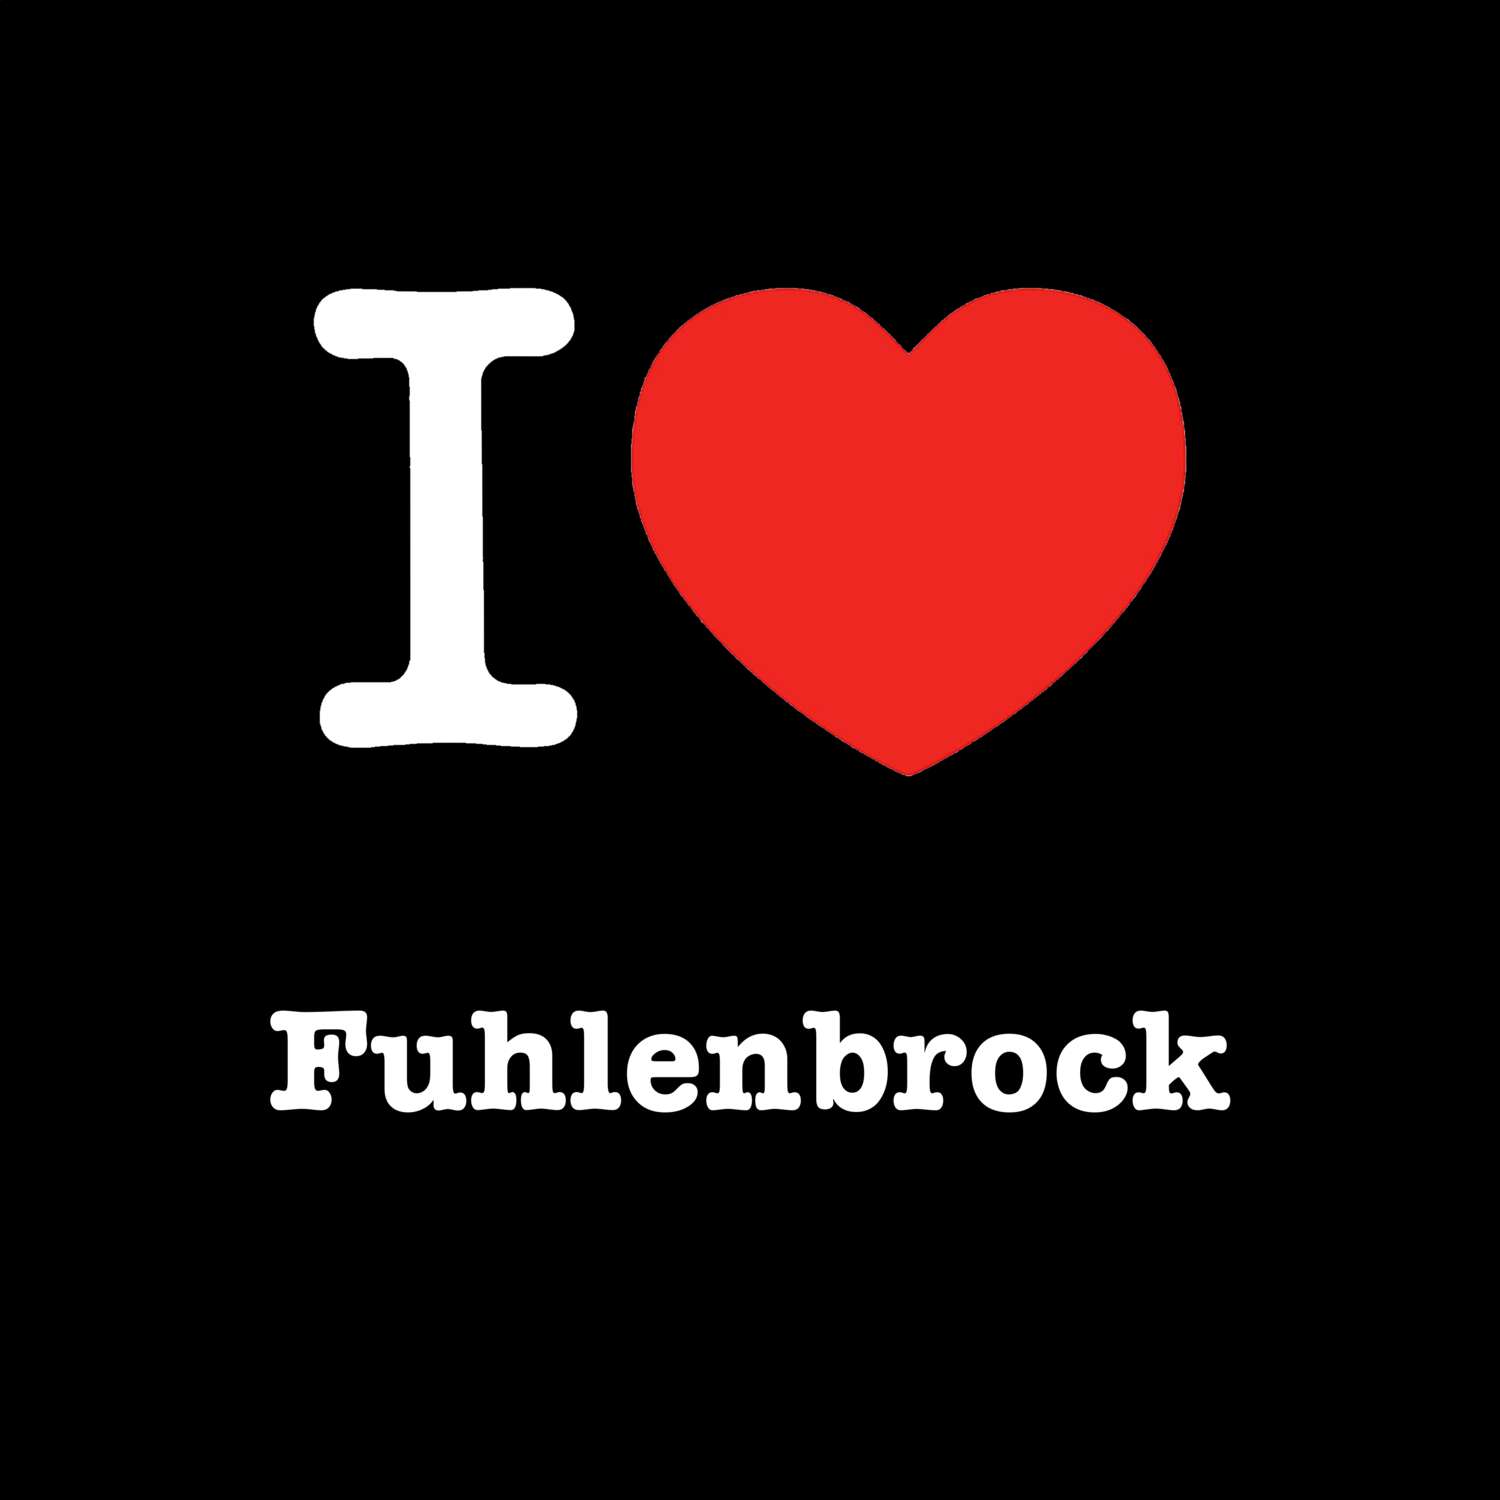 Fuhlenbrock T-Shirt »I love«